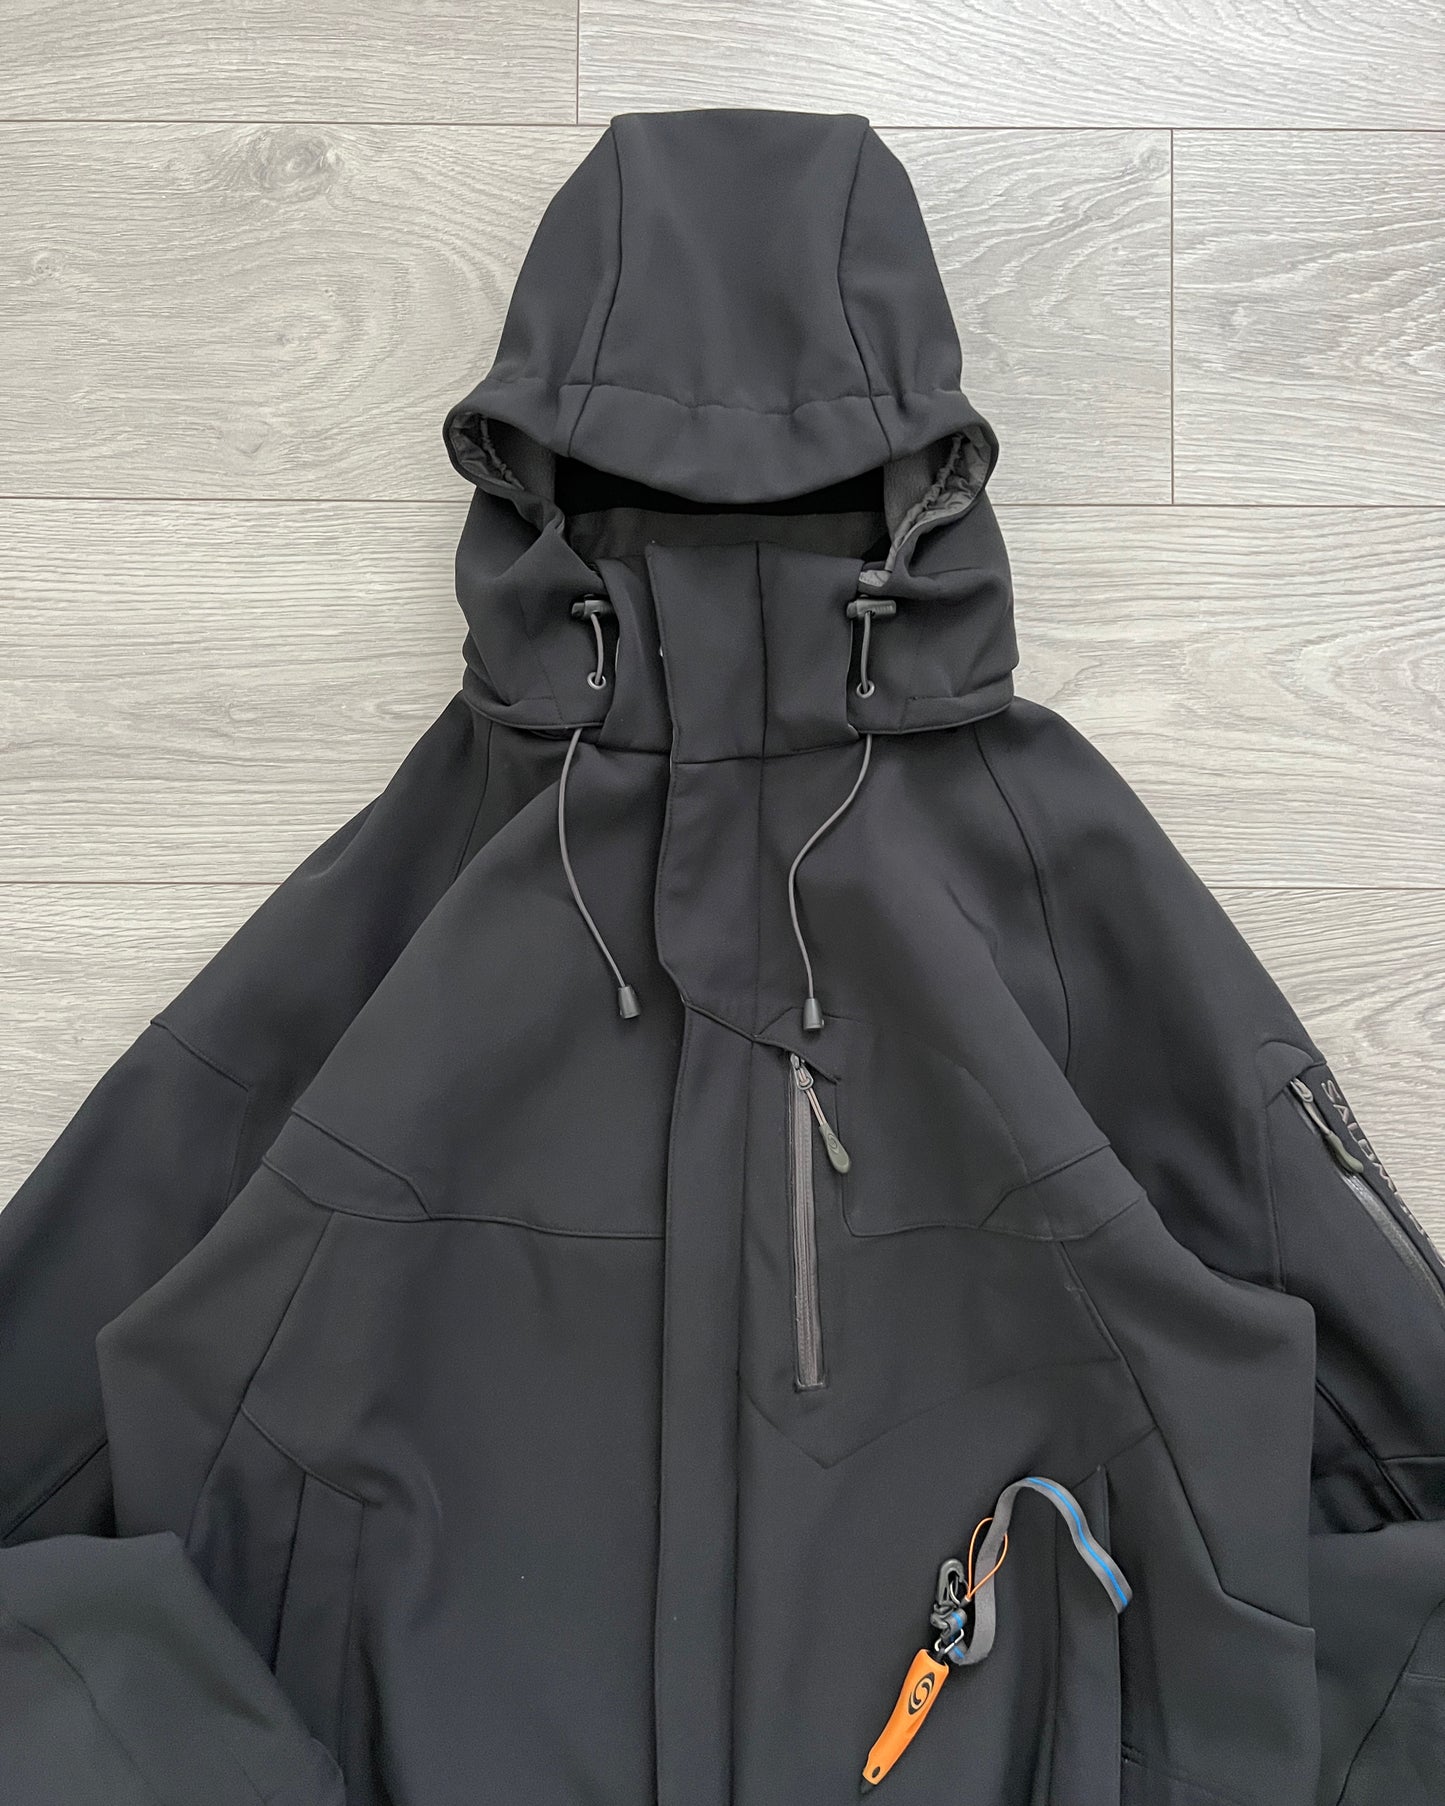 Salomon 00s Technical Fleece-Lined Utility Softshell Jacket - Size L